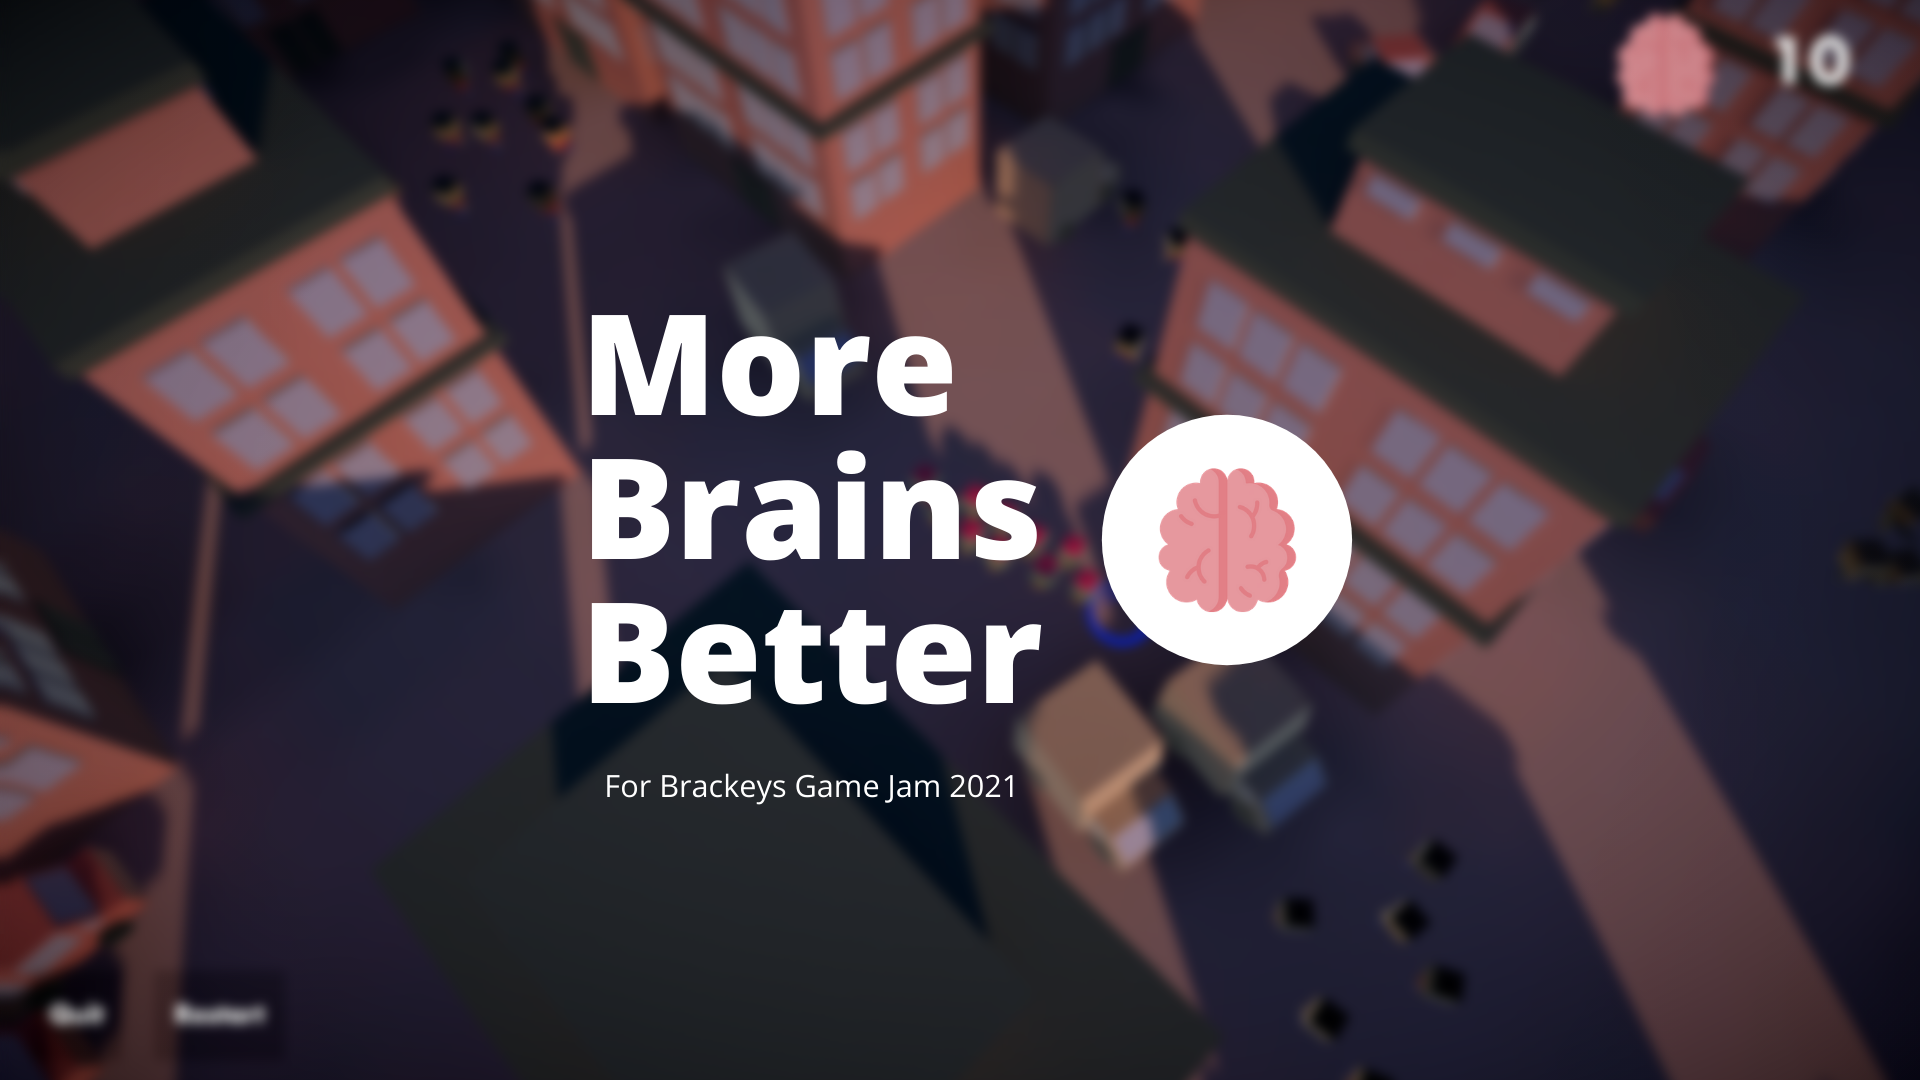 More Brains Better